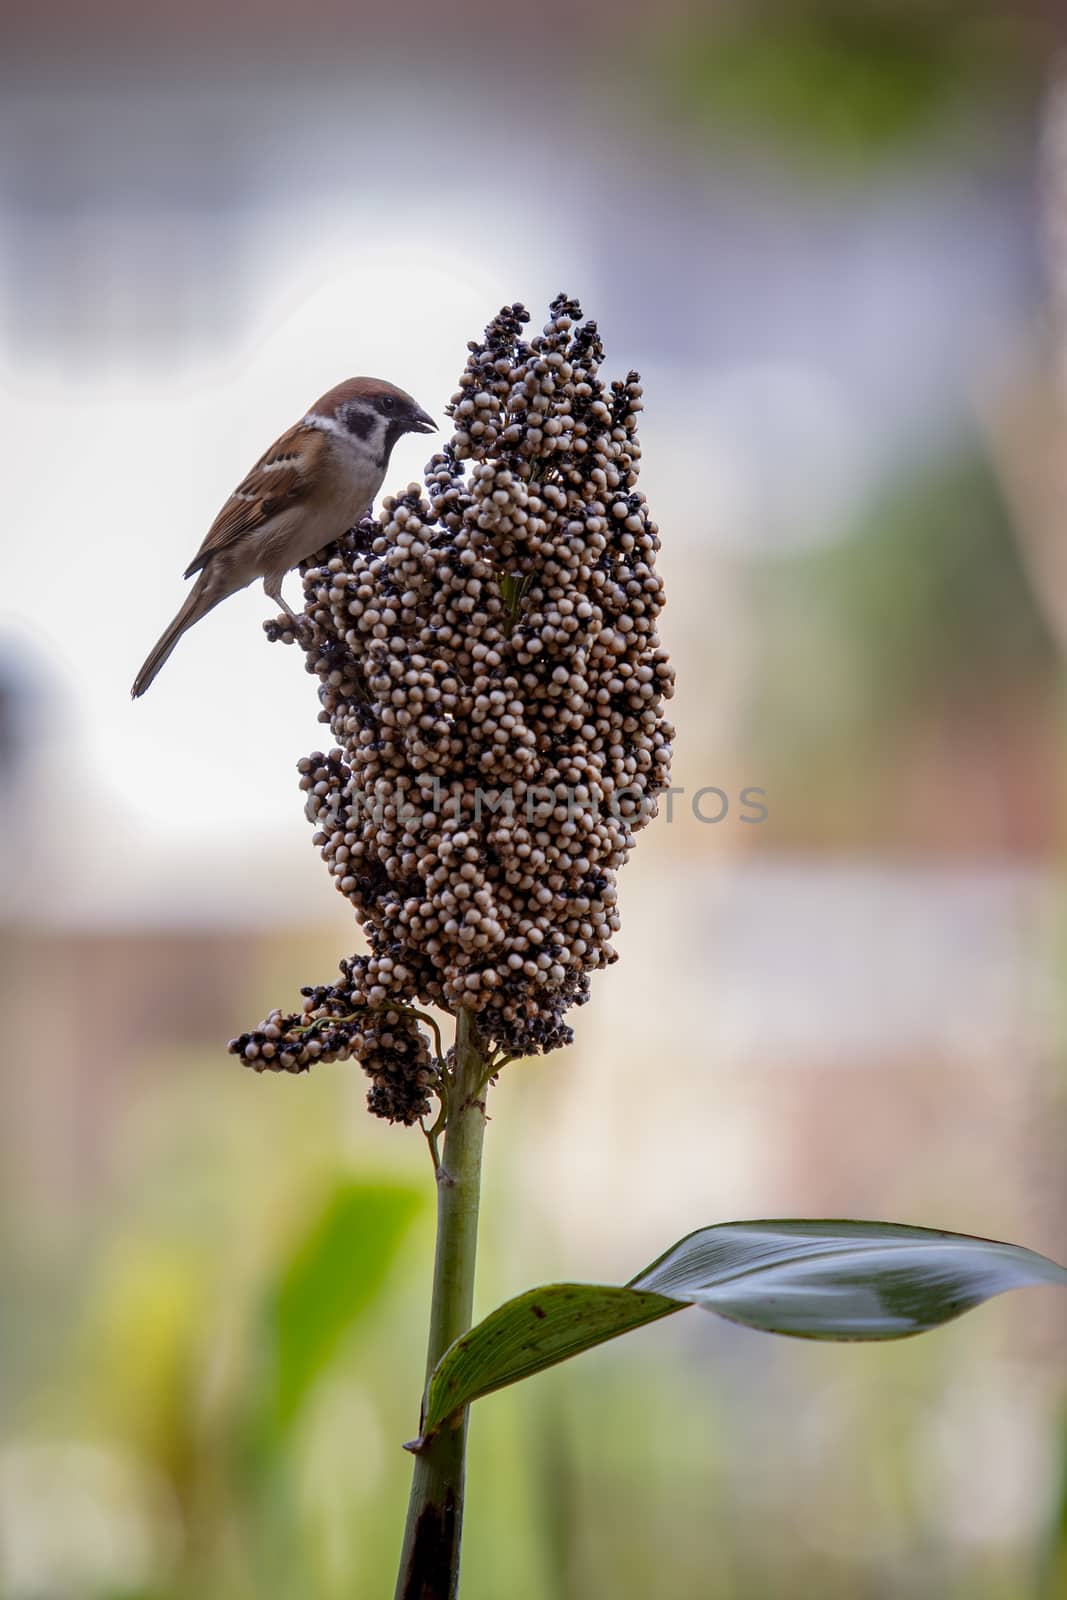 urasian tree sparrow and grains natural wild life by khunaspix